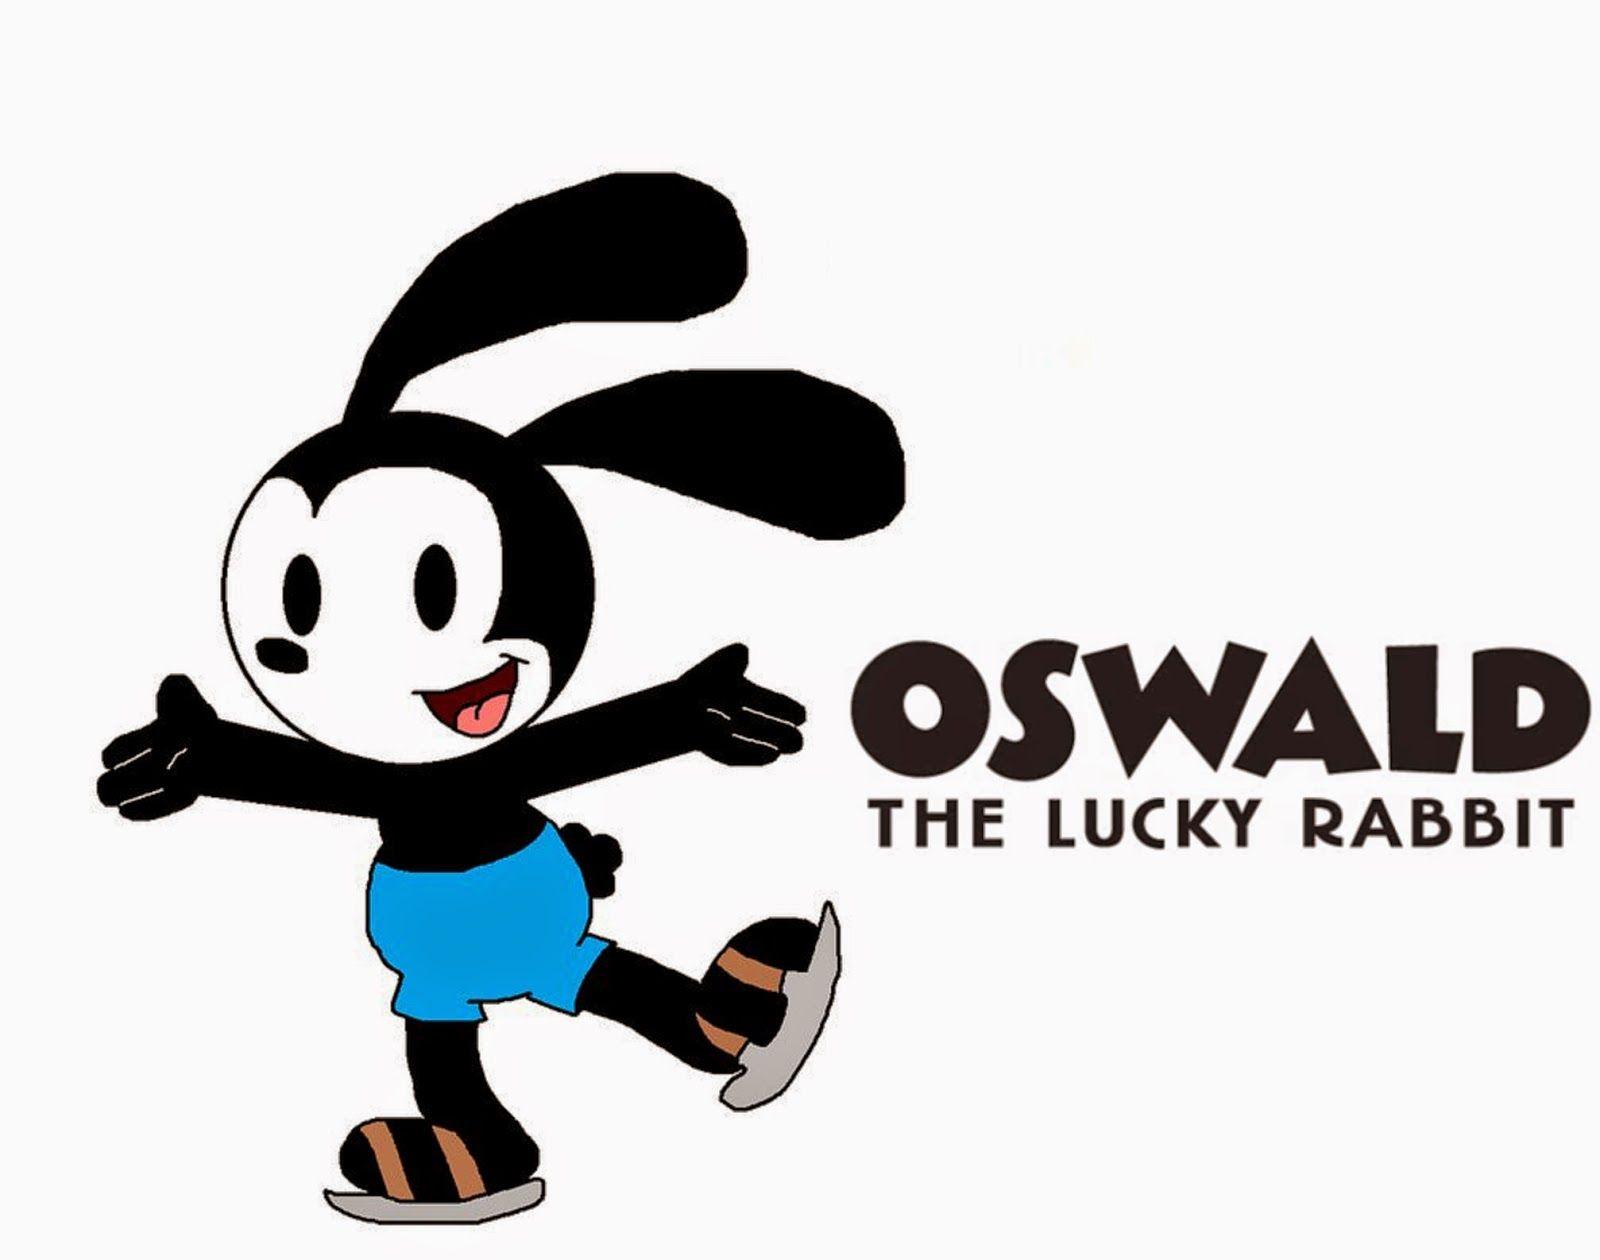 Disney HD Wallpaper: Oswald the Lucky Rabbit HD Wallpaper